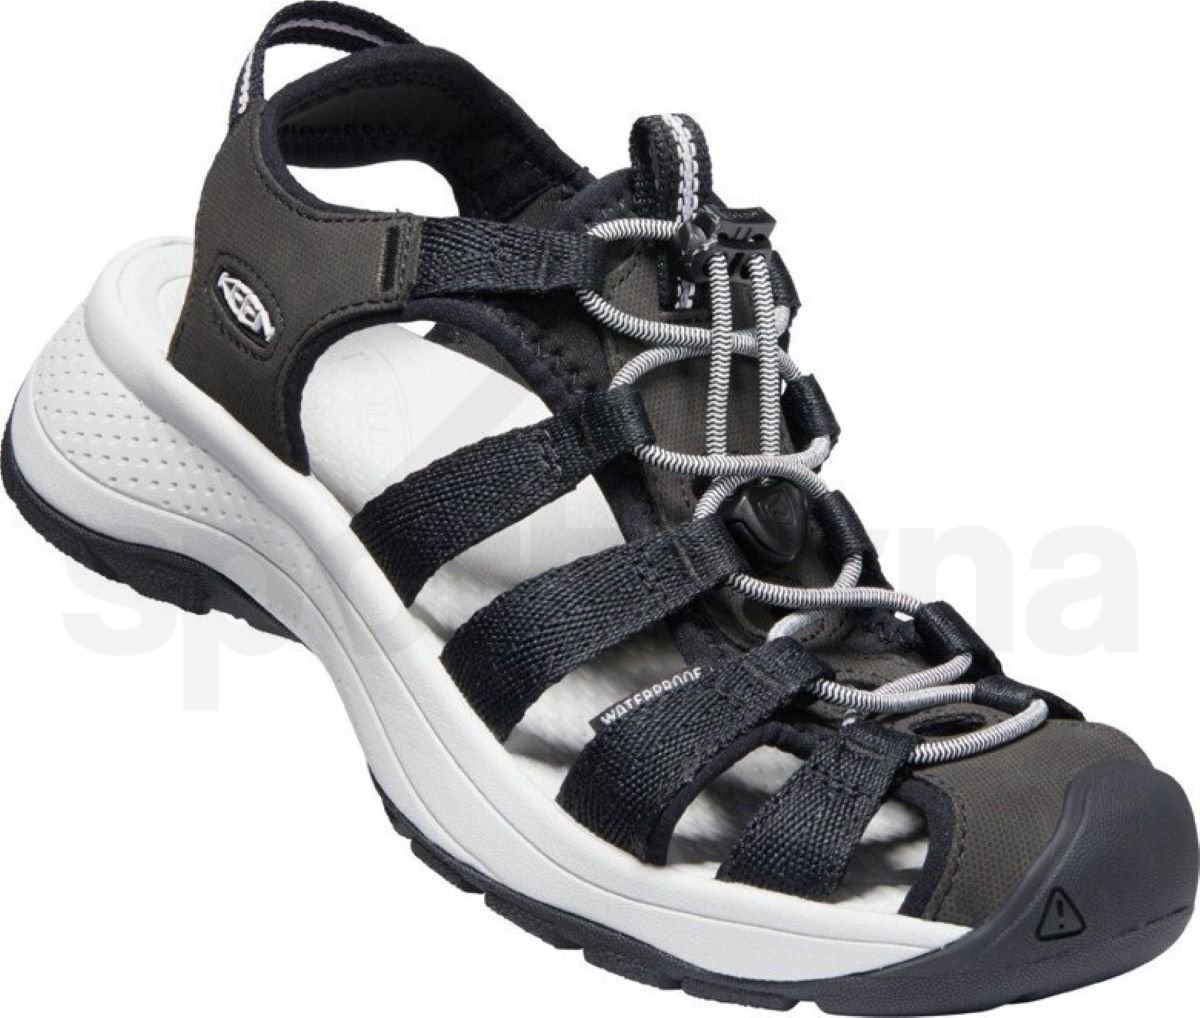 Obuv - sandály Keen Astoria West Sandal W - černá/šedá